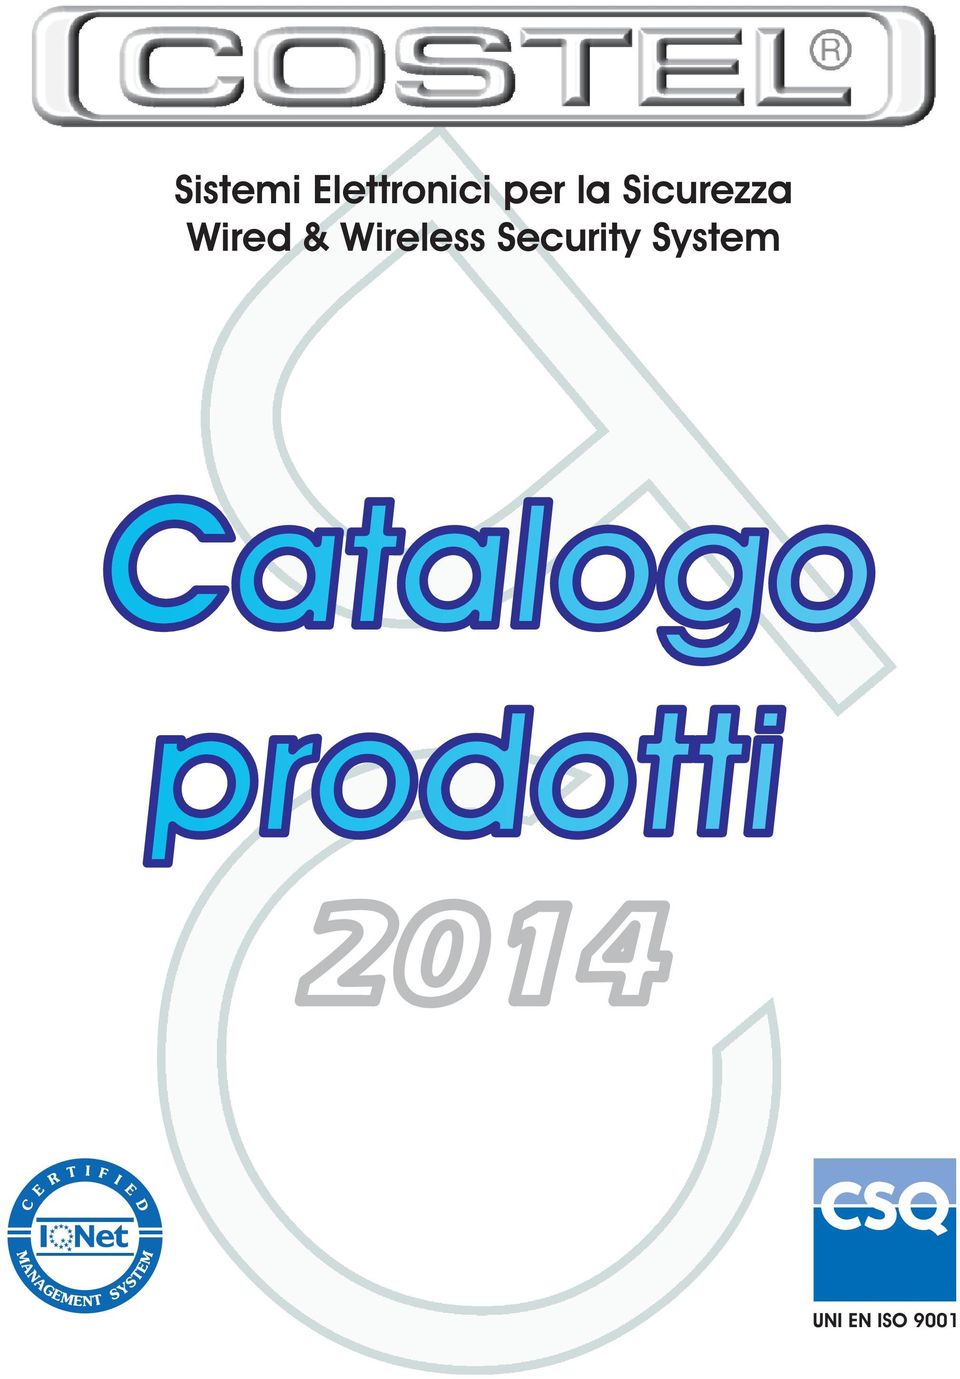 Security System Catalogo